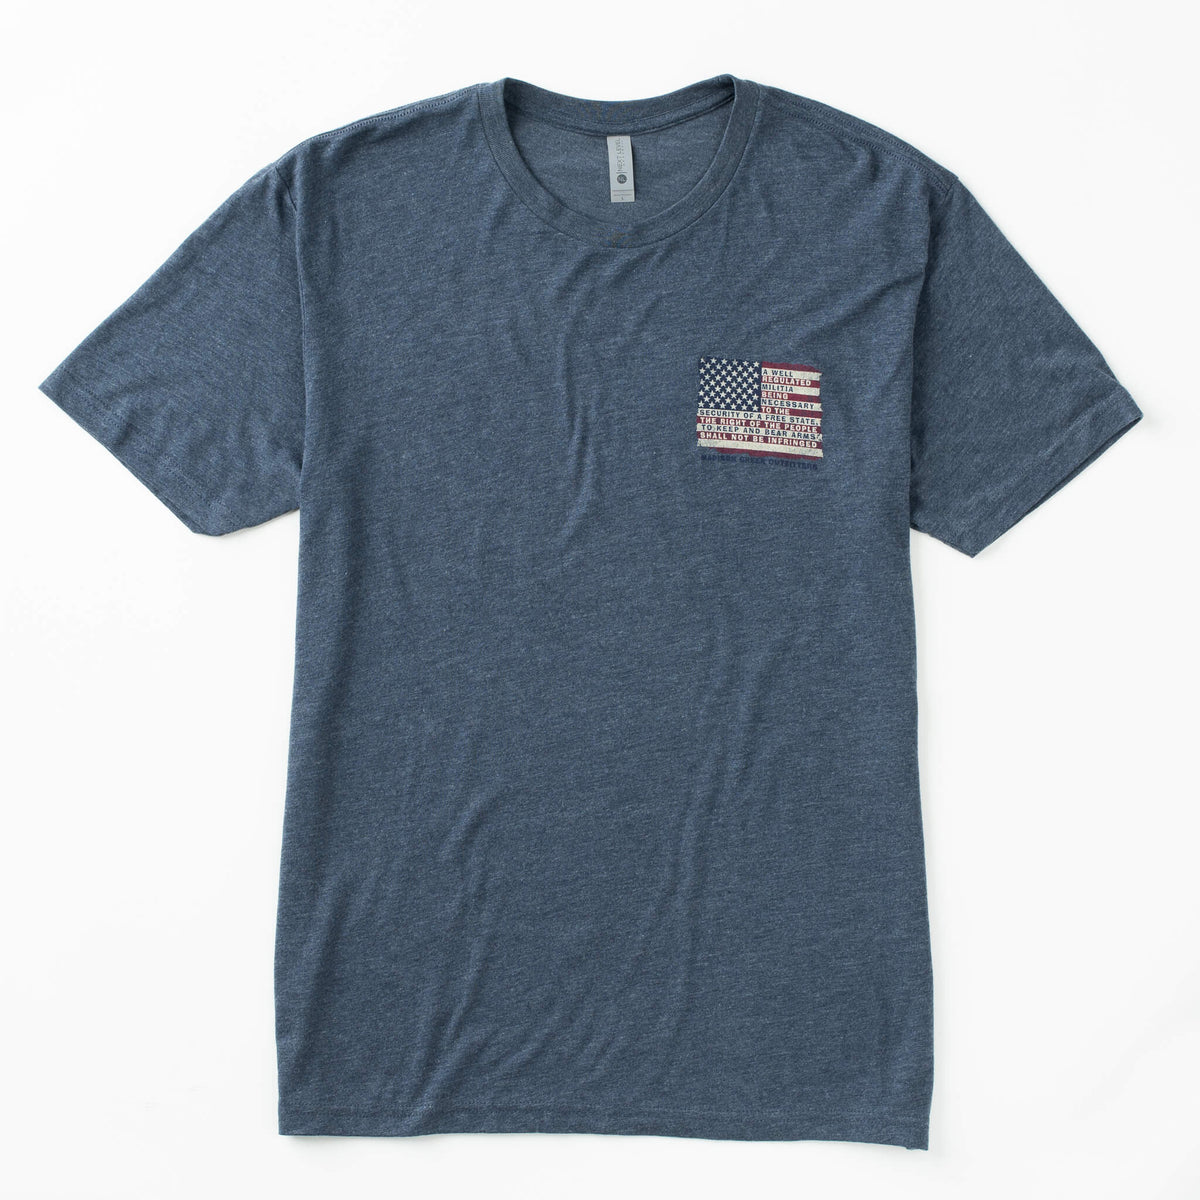 2nd Amendment T-shirt